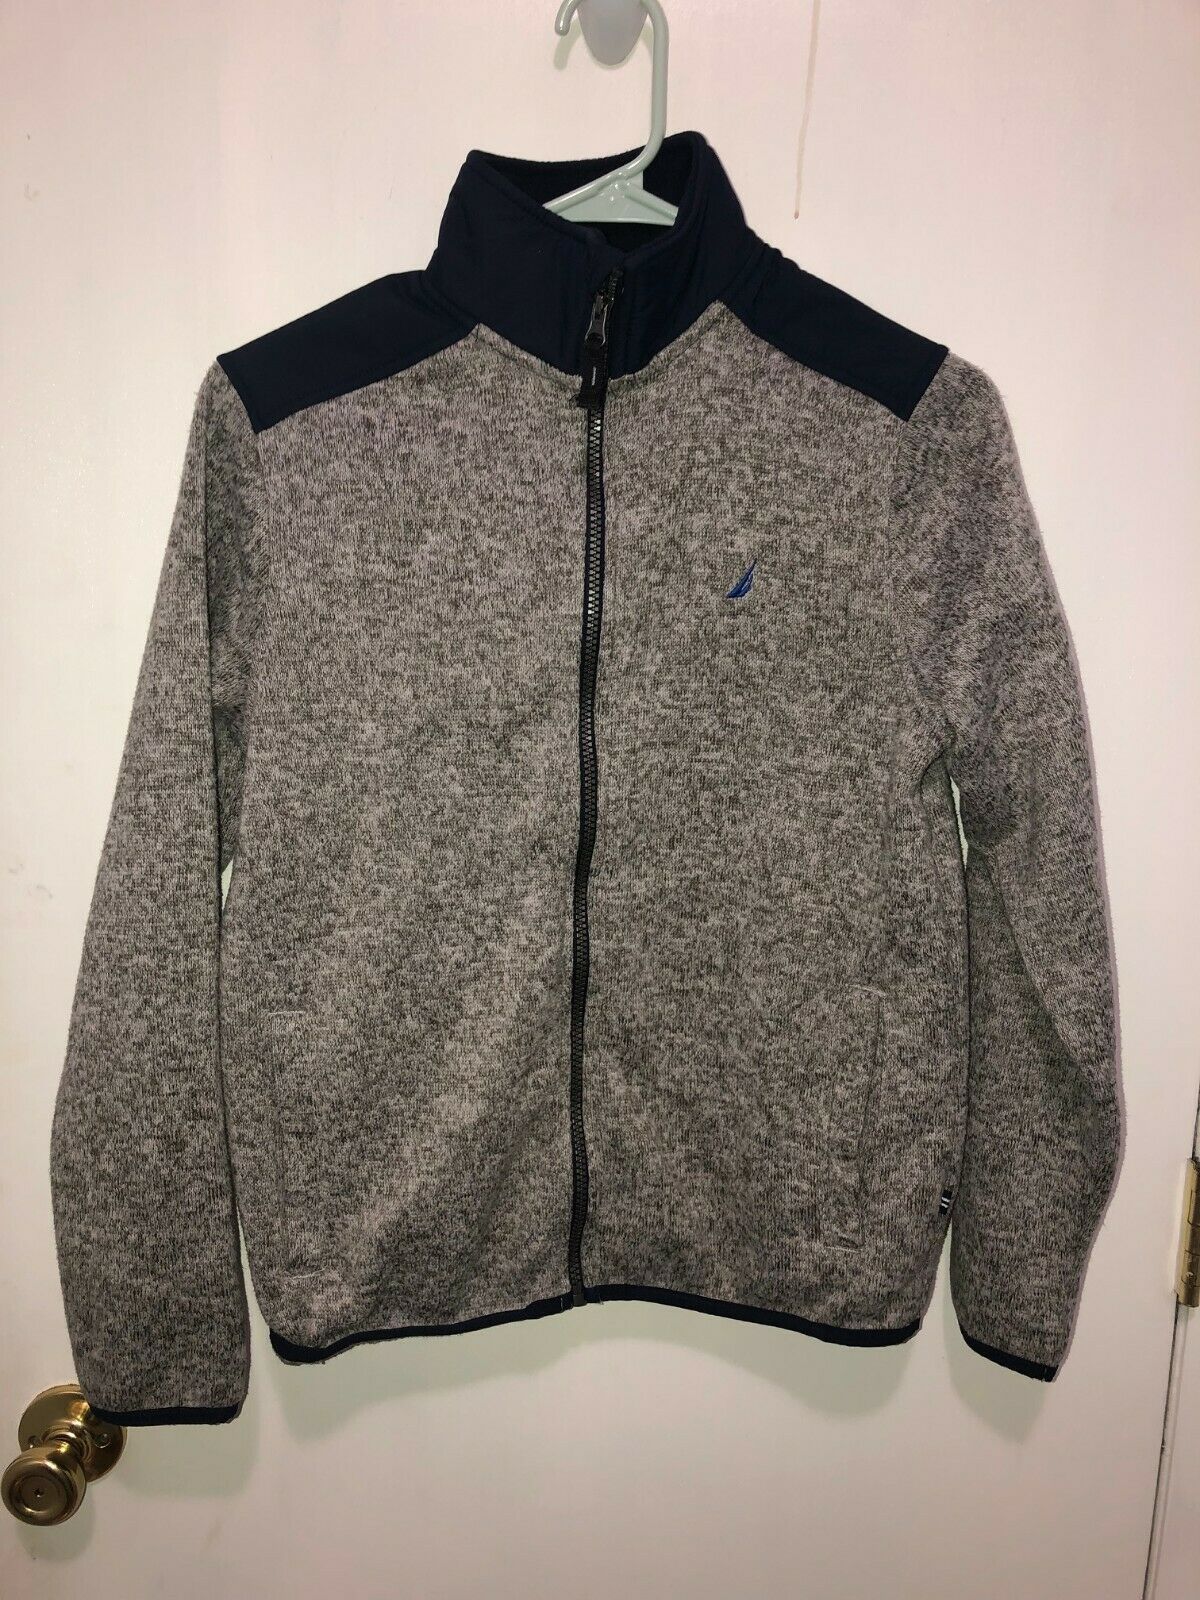 Nautica Boys SZ Large 14-16 Sweater Fleece Jacket Mock Neck Full Zip Gray & Blue - $9.89